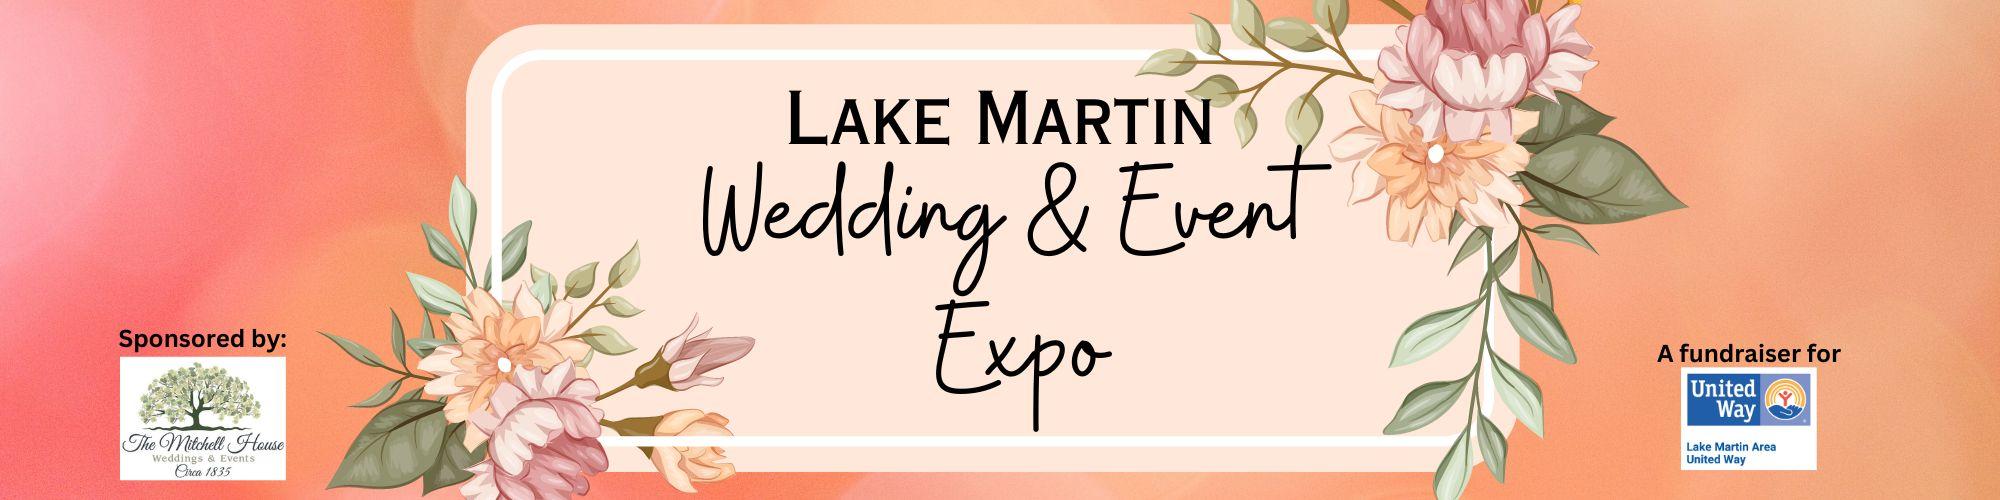 Lake Martin Wedding & Event Expo